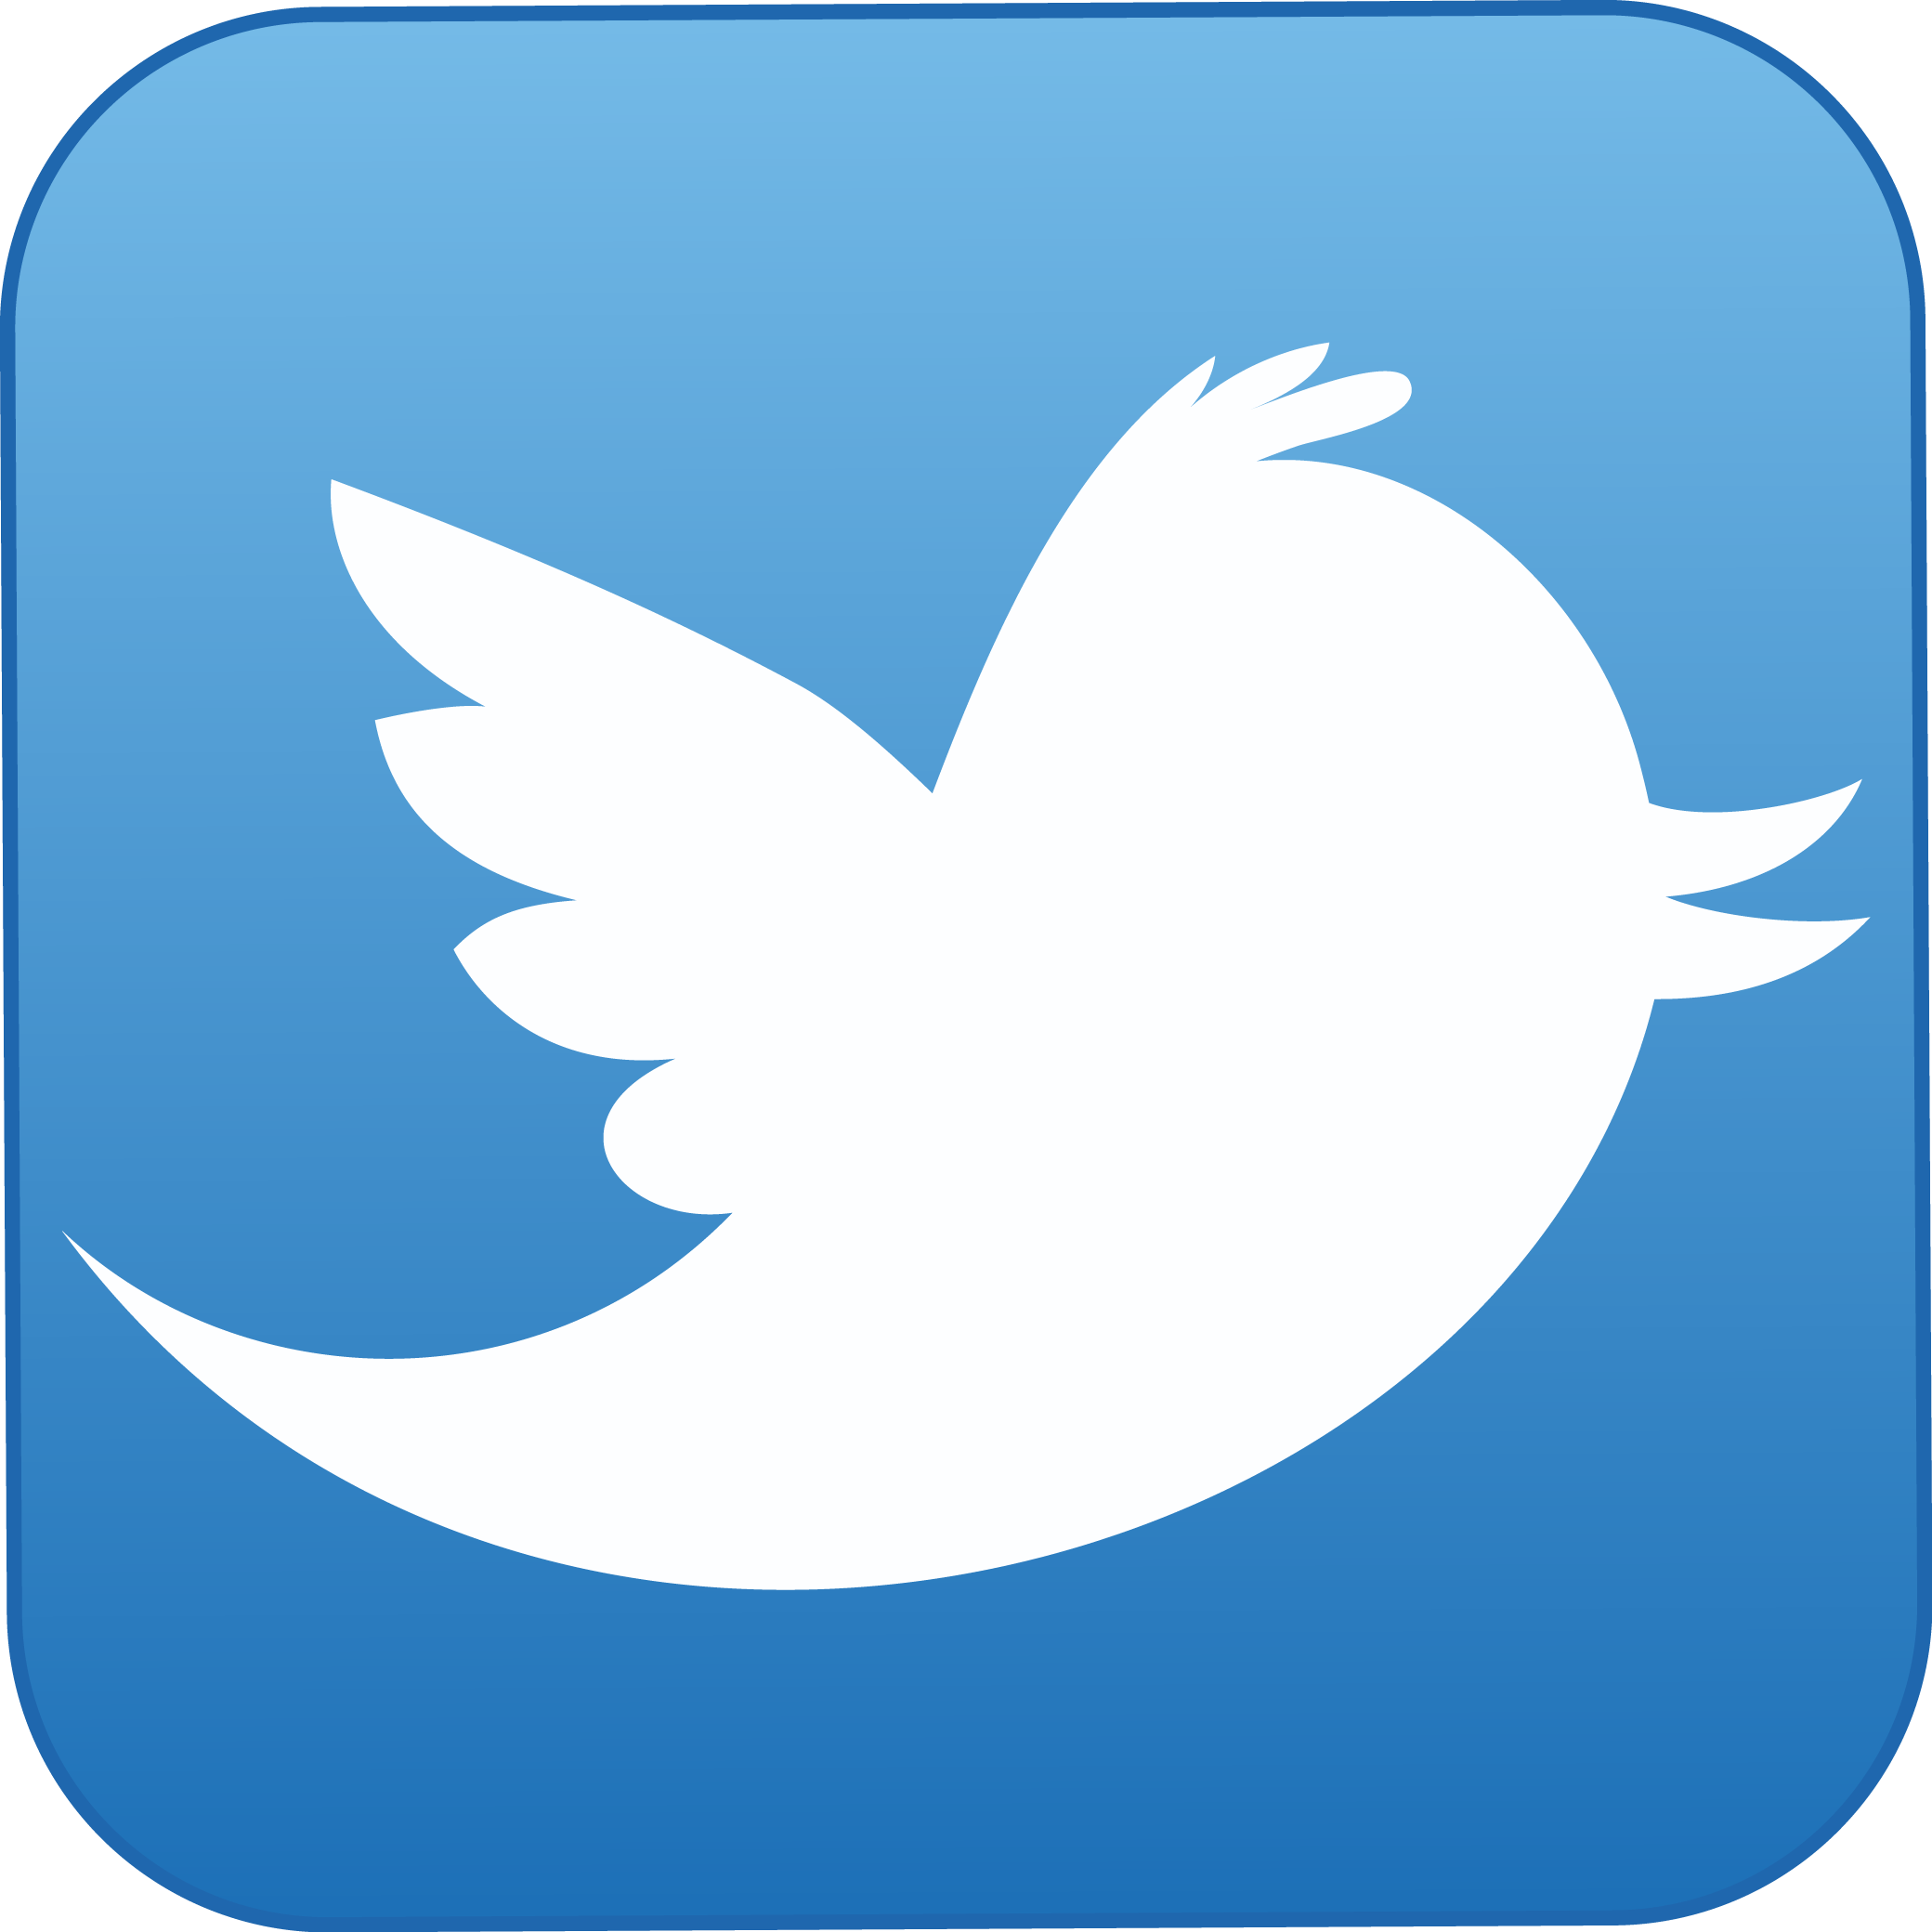 Падение акций компании Twitter